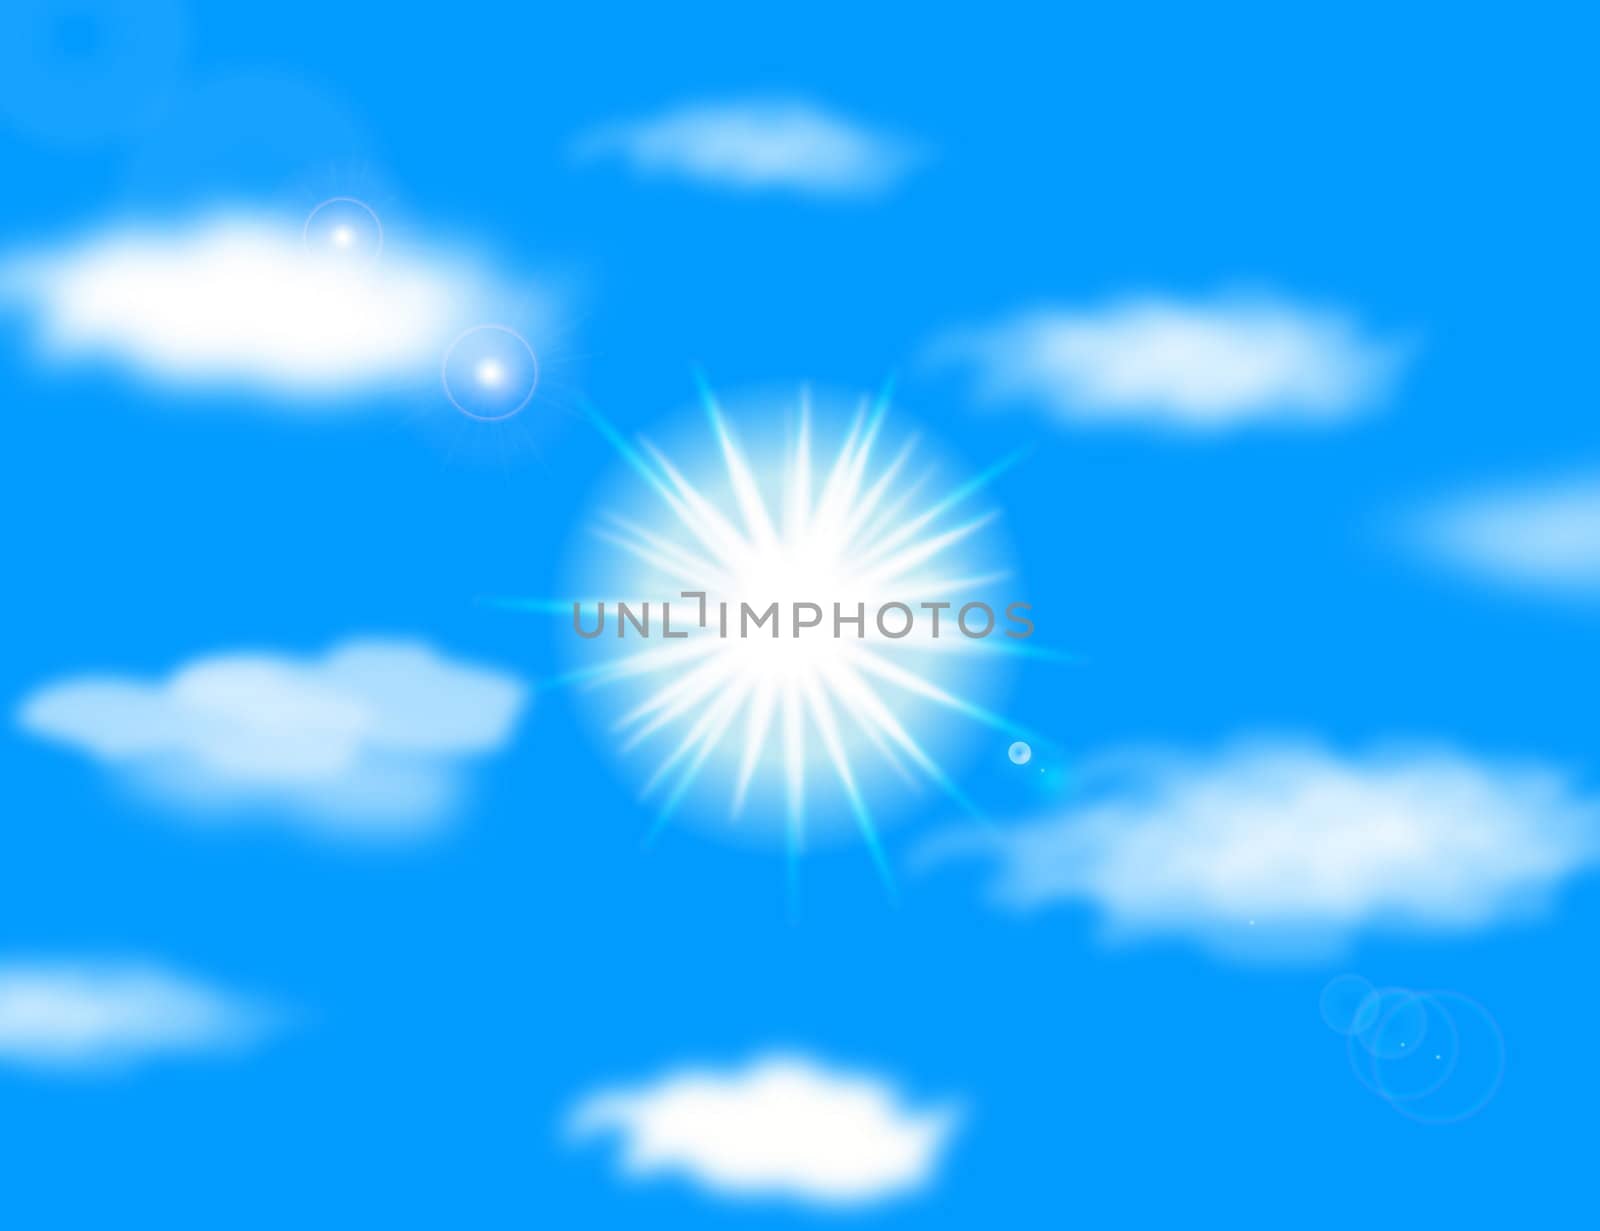 sun on blue sky with lenses flare by svtrotof